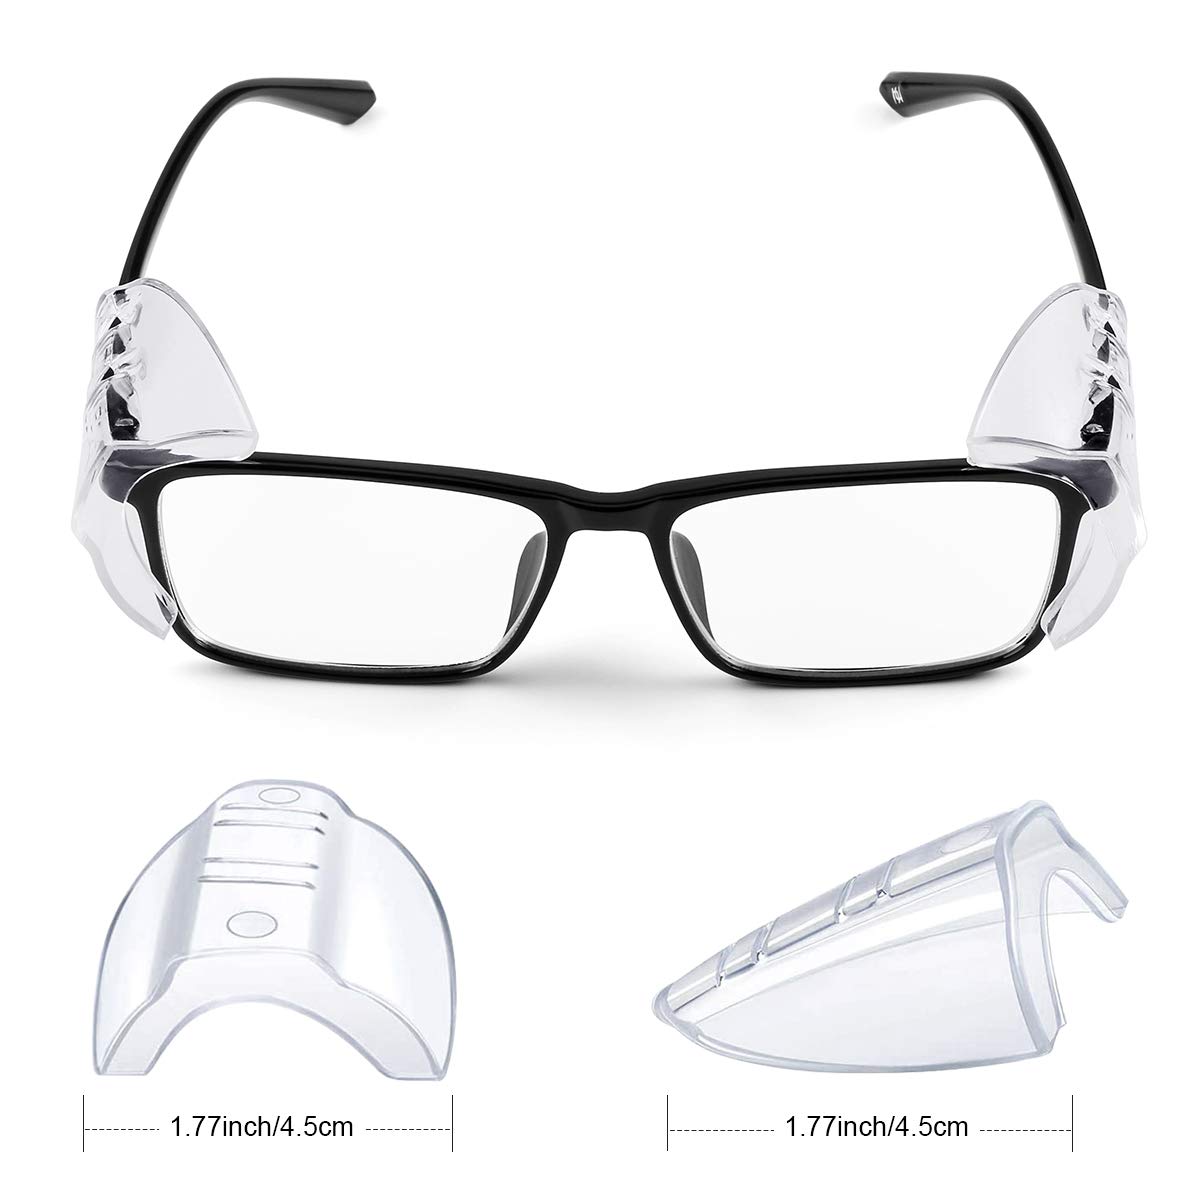 MELASA 12 Pairs Eye Glasses Side Shields, Flexible Slip on Side Shields for Safety Glasses Fits Small to Large Eyeglasses Universal